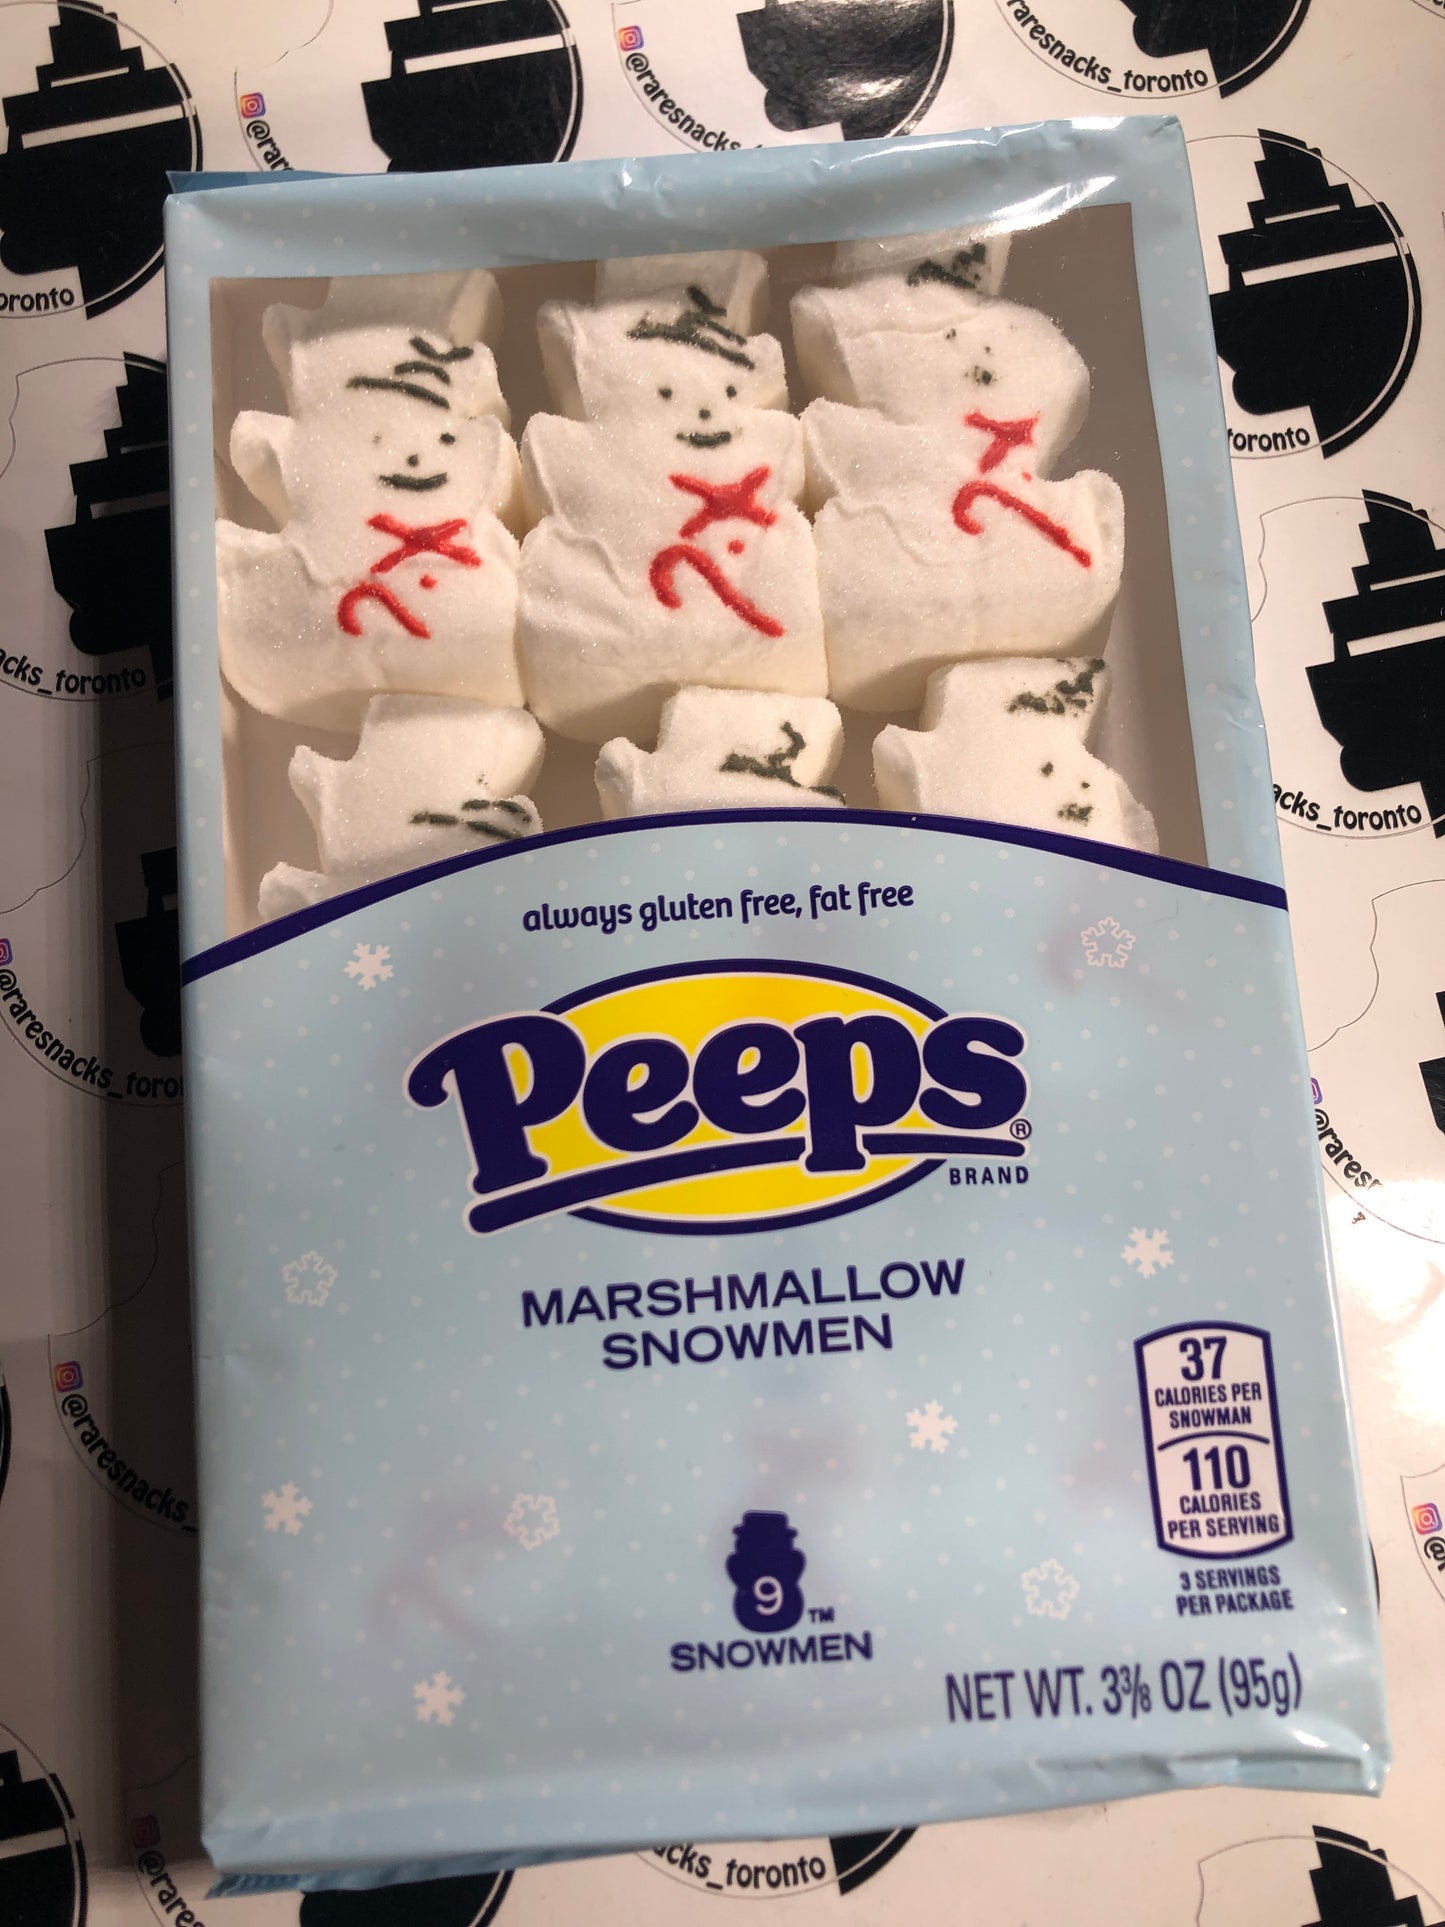 Peeps Snowmen